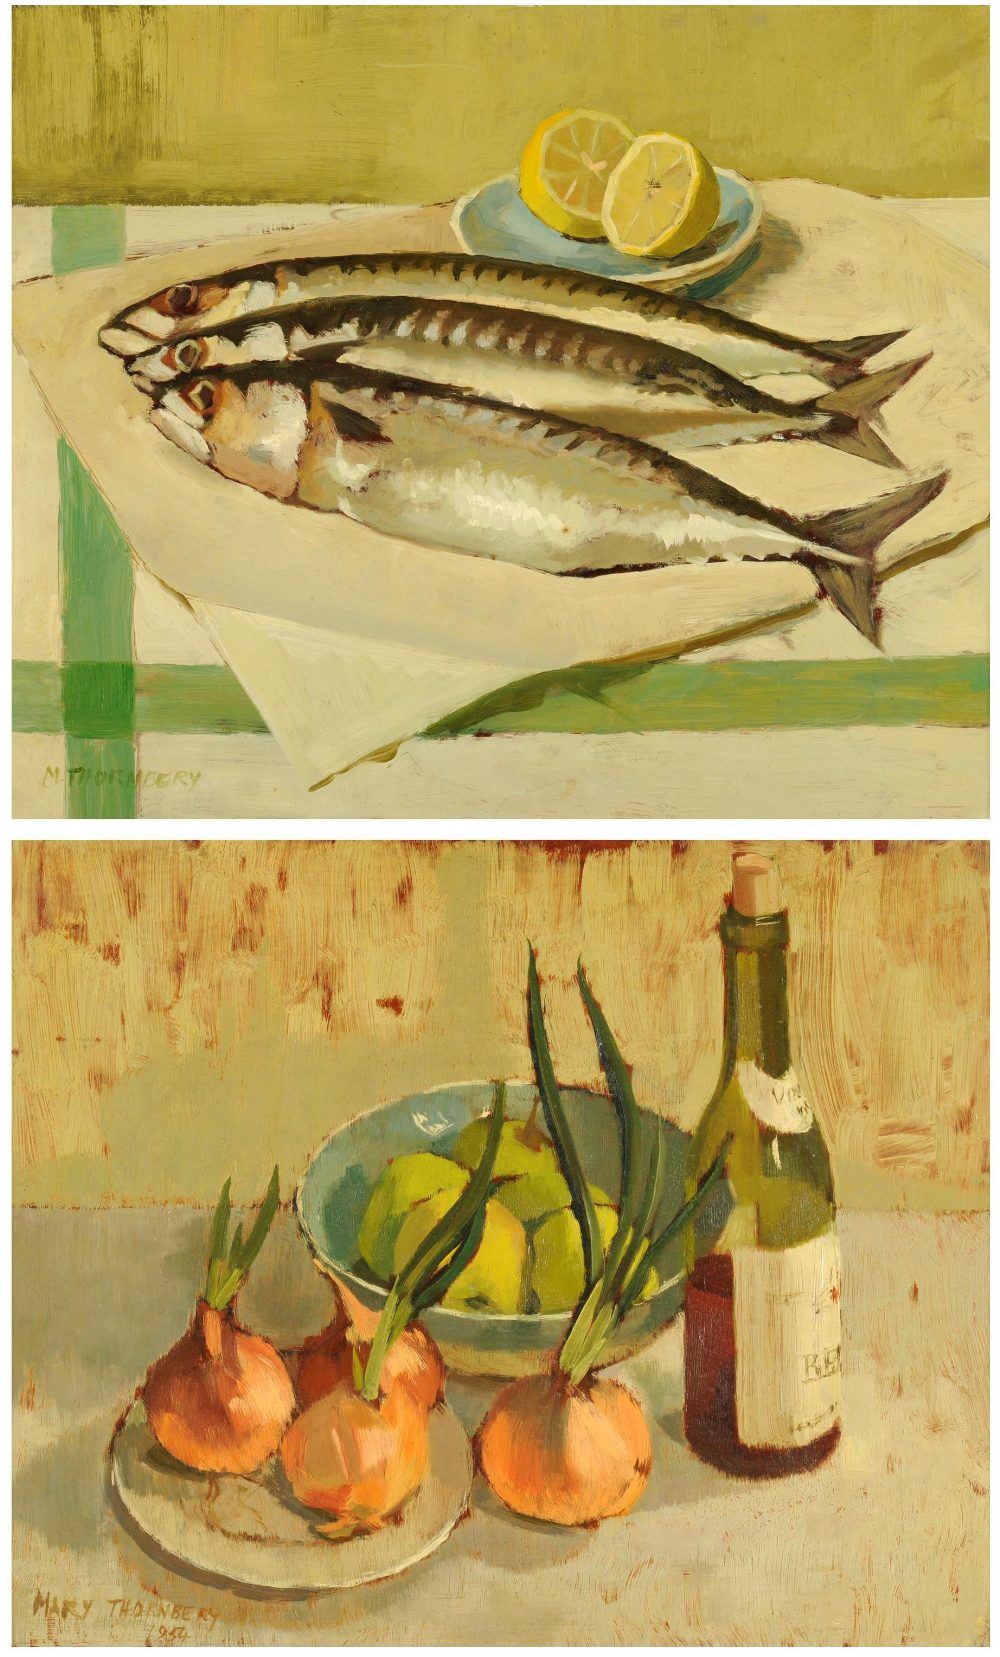 Mary Thornbery (20th century) 
Still life of mackerel and lemons
Still life of sprouting onions,